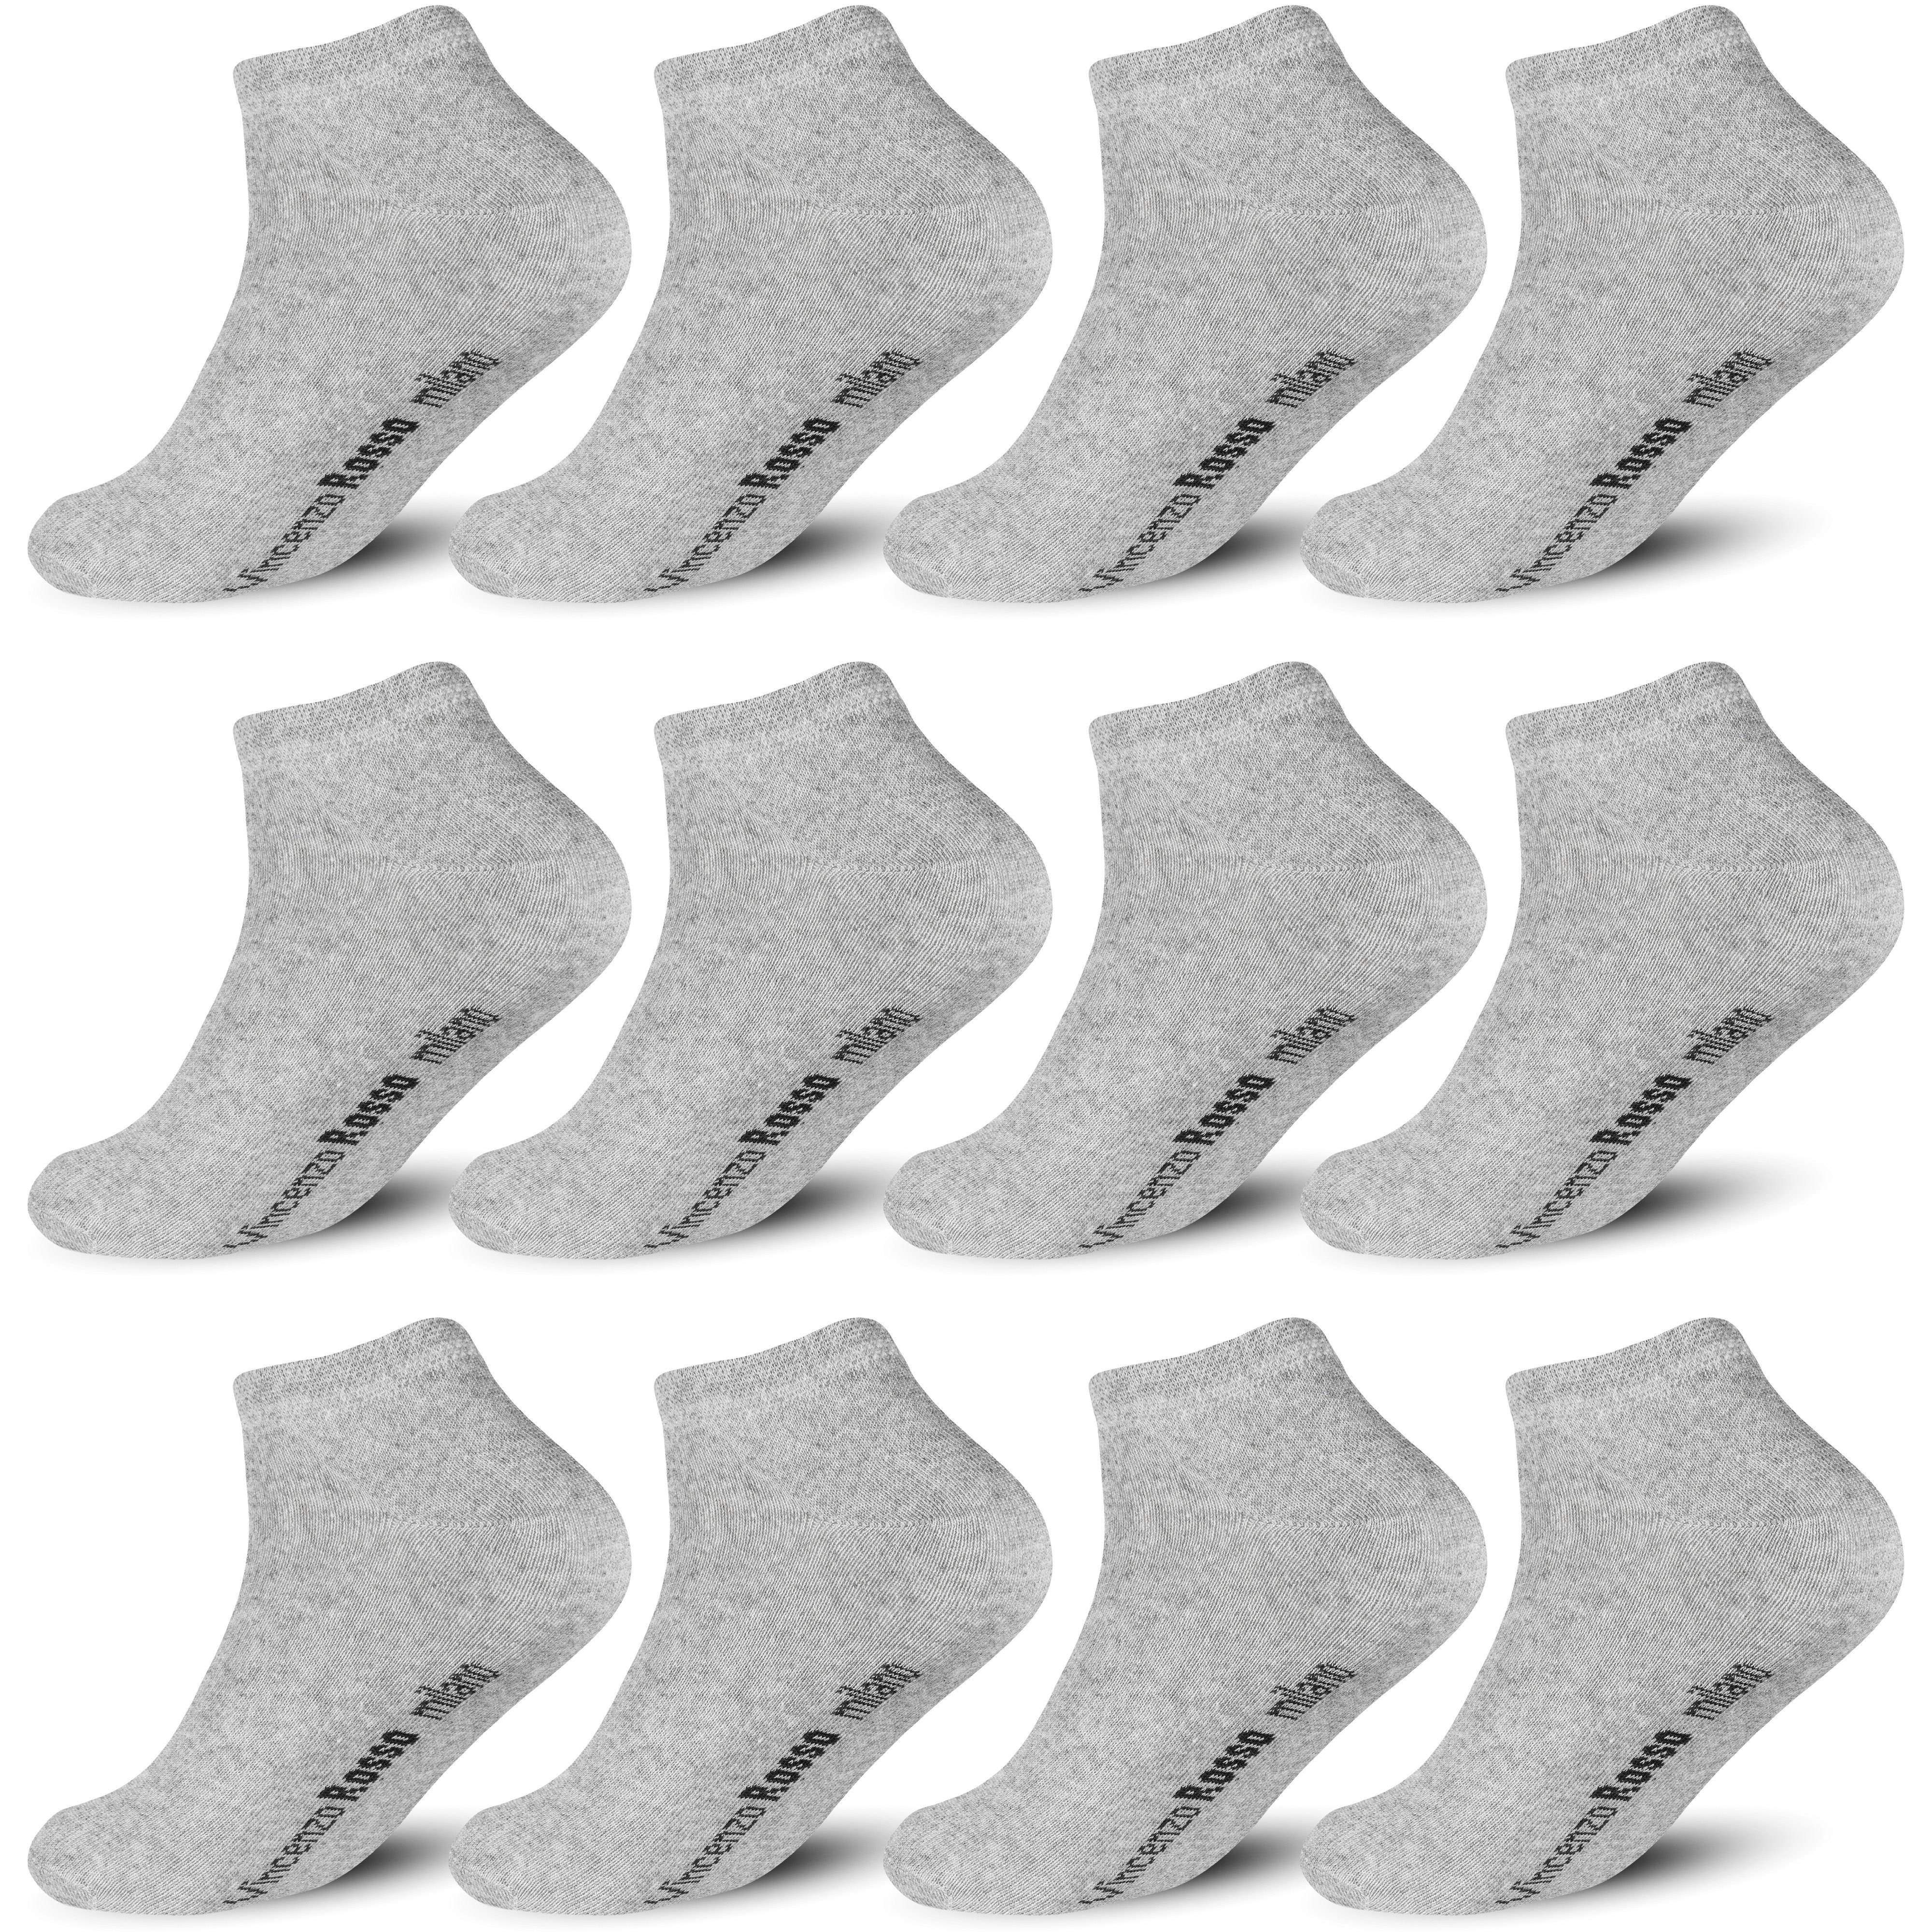 TEXEMP Sneakersocken 12 Paar Sneaker Damen Herren Sport Schwarz Weiß Füßlinge Socken Baumwolle Quarter Grau Langlebig & Kurz Robust (Packung)